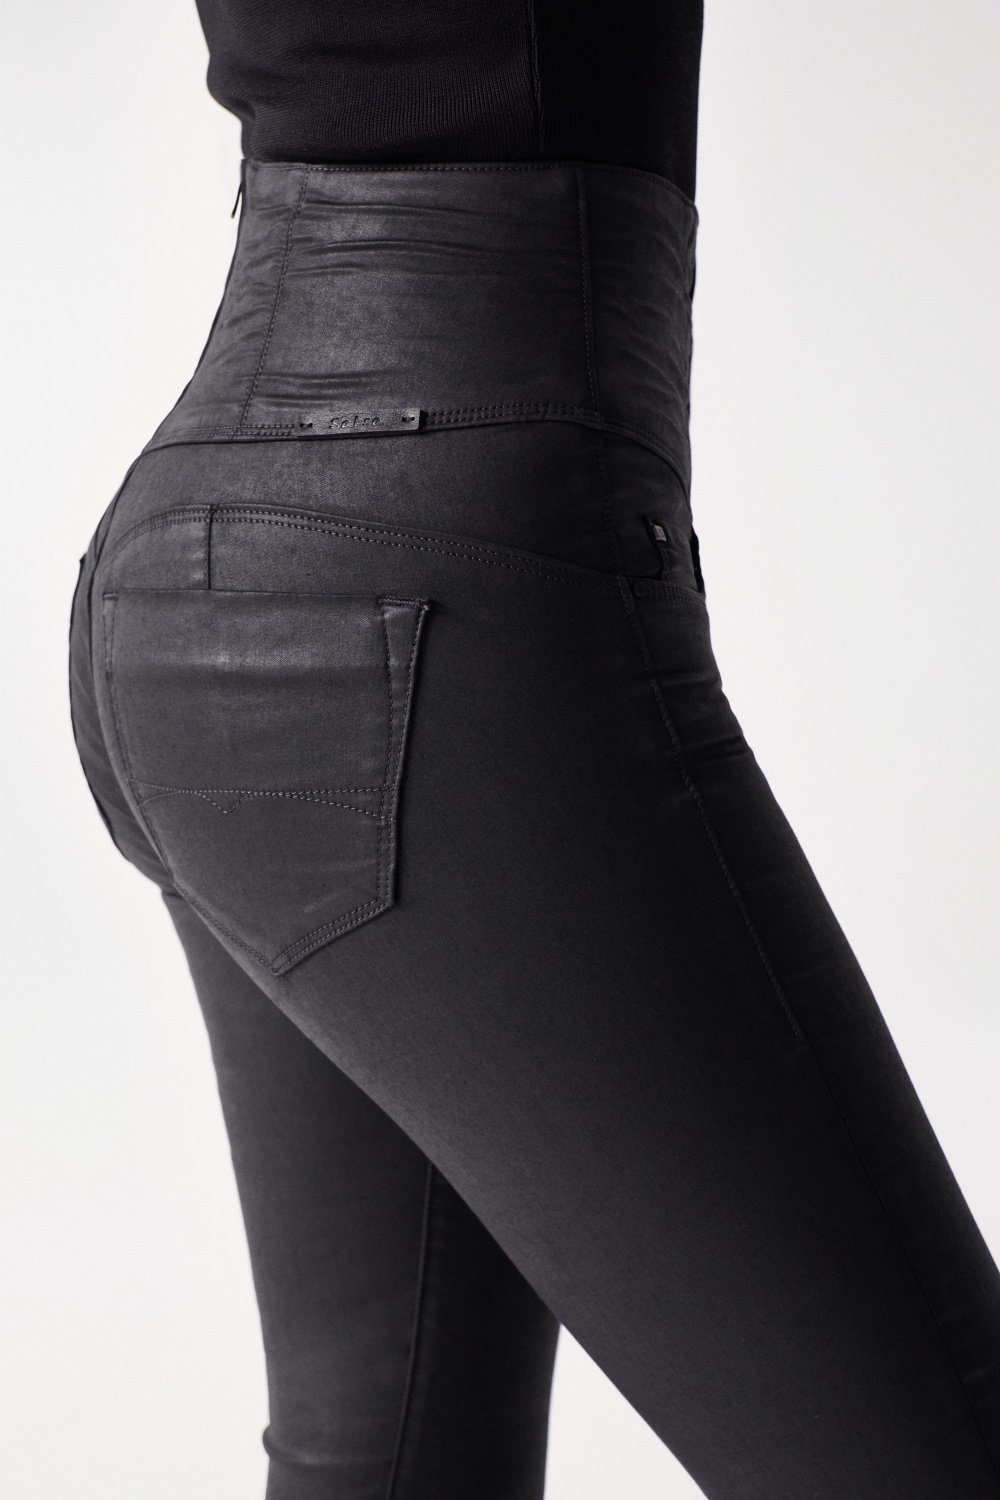 Diva slim fit slimming jeans with coating - Salsa